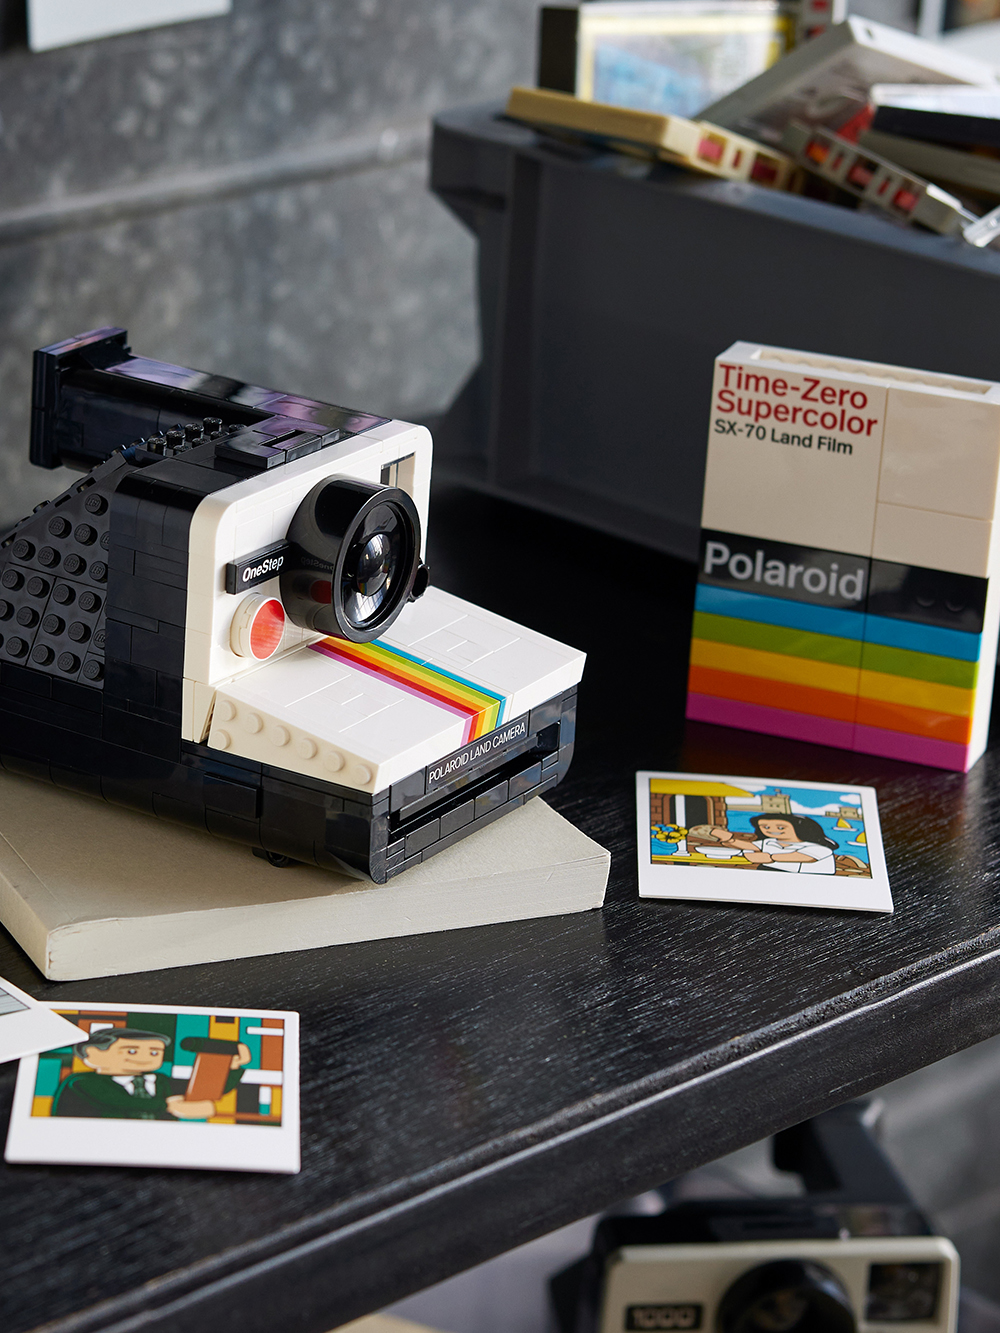 Pellicule Polaroid Film NB pour SX-70